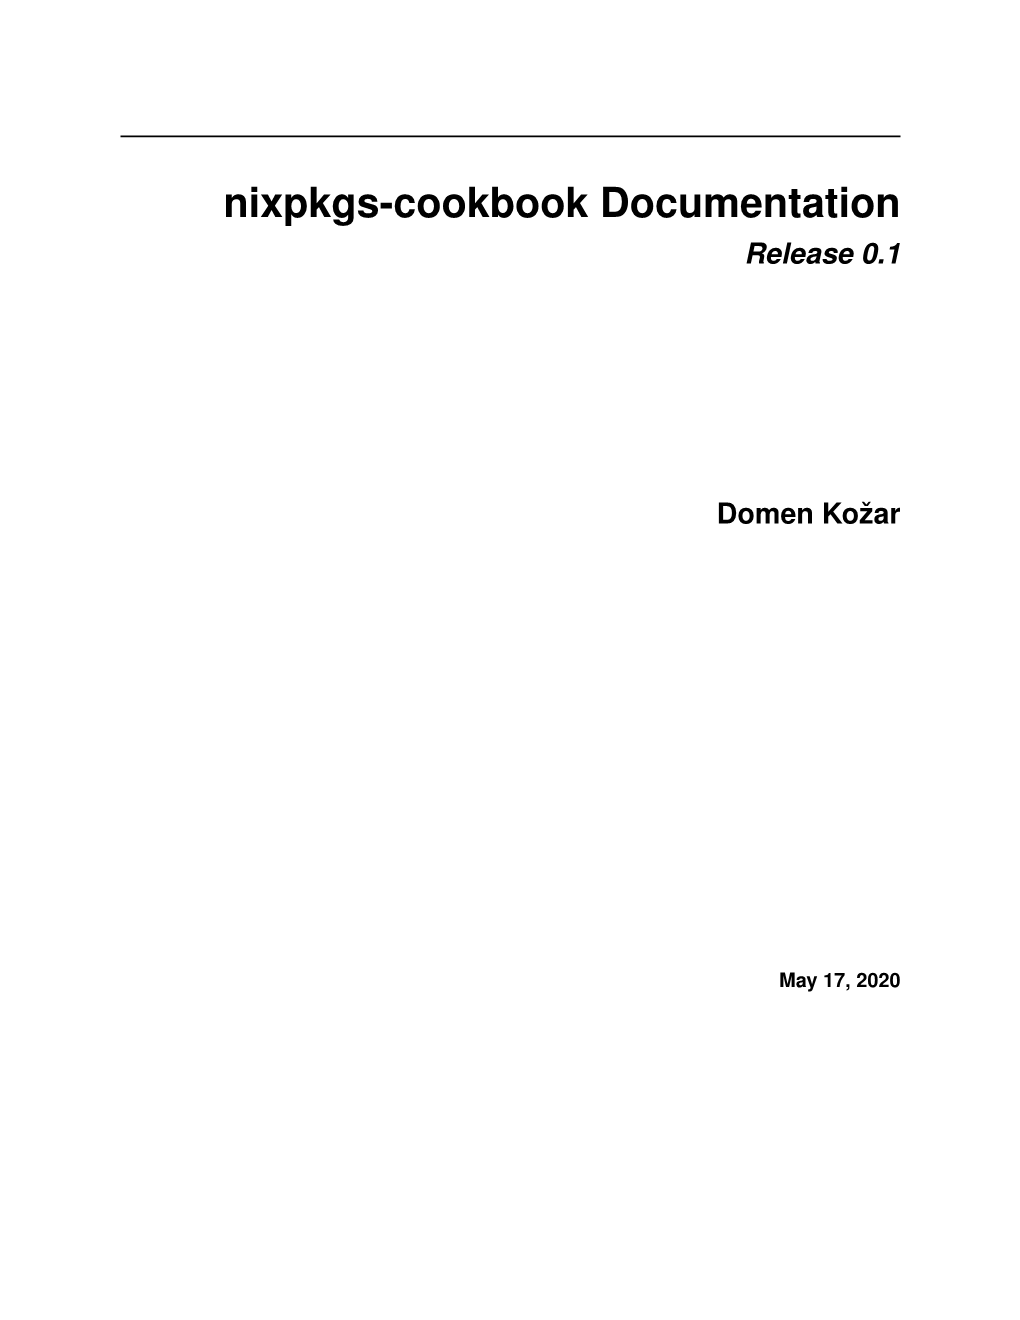 Nixpkgs-Cookbook Documentation Release 0.1